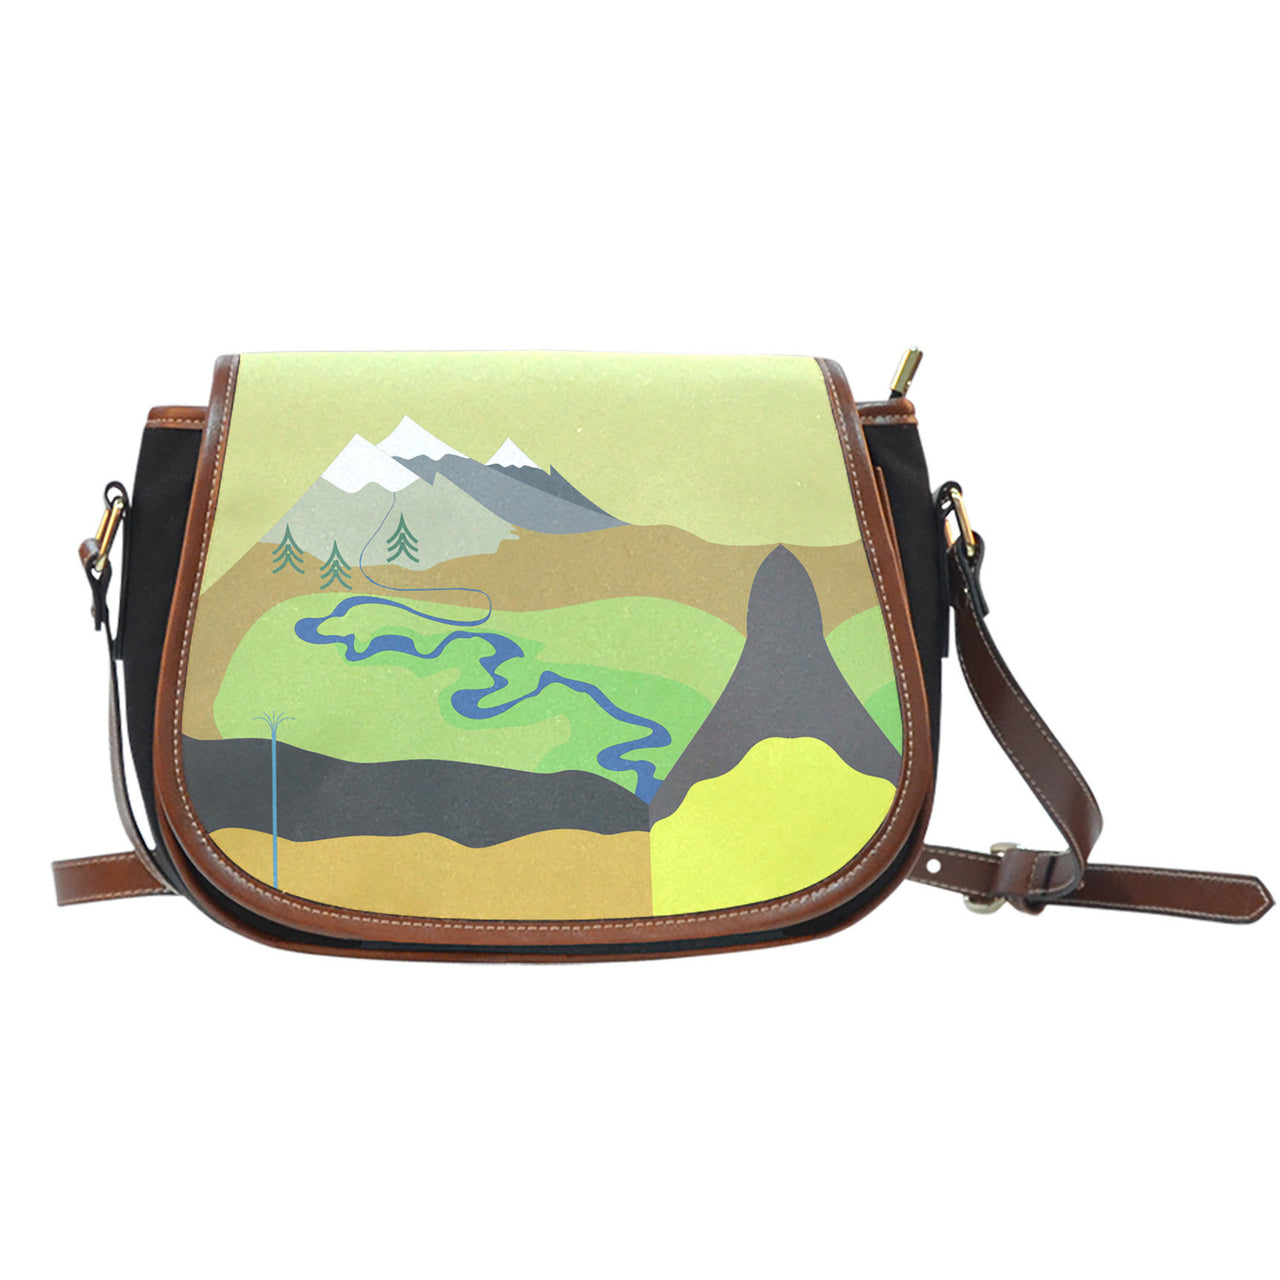 Geologist Saddle Bag